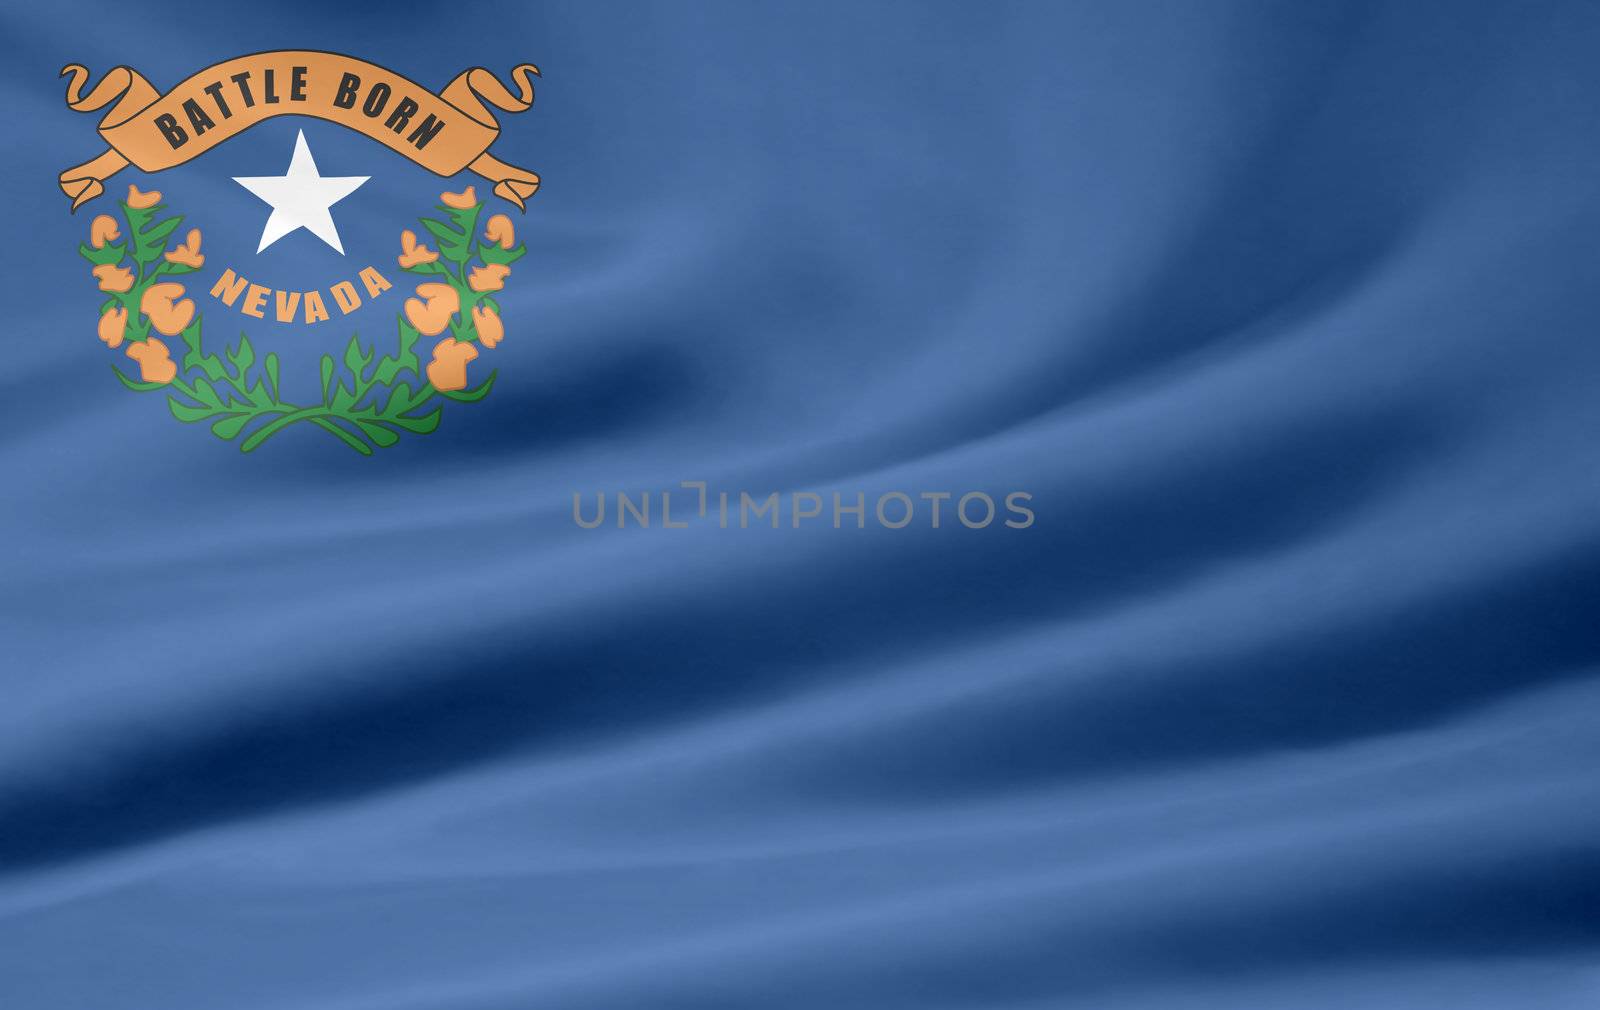 Flag of Nevada